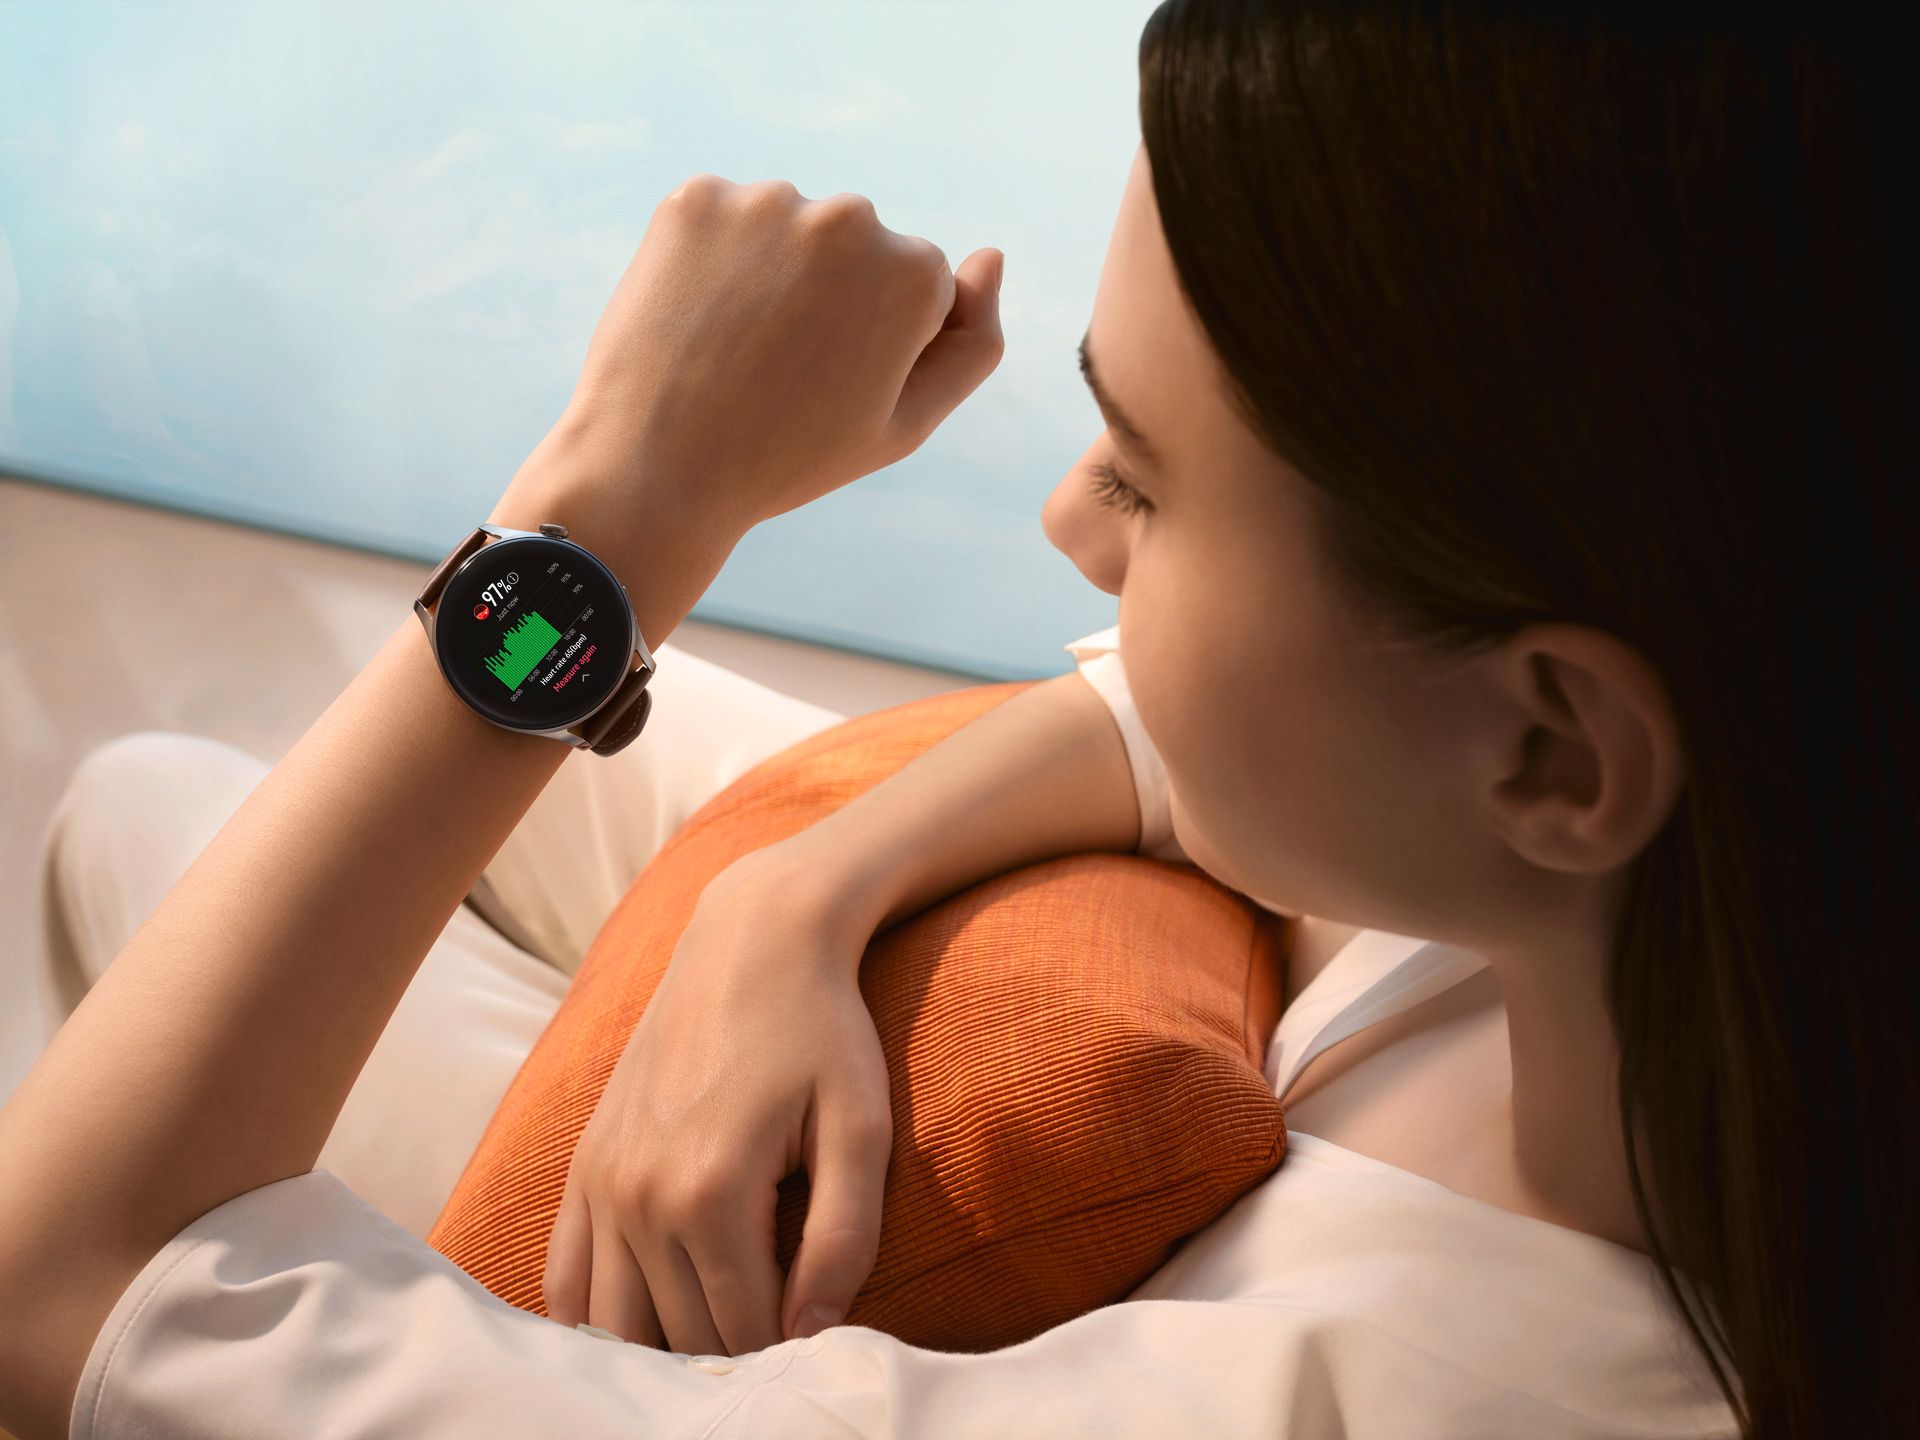 Huawei Watch 3 Active Galileo-L11E schwarz Smartwatch eSIM 1,43 Zoll Notruffunk.